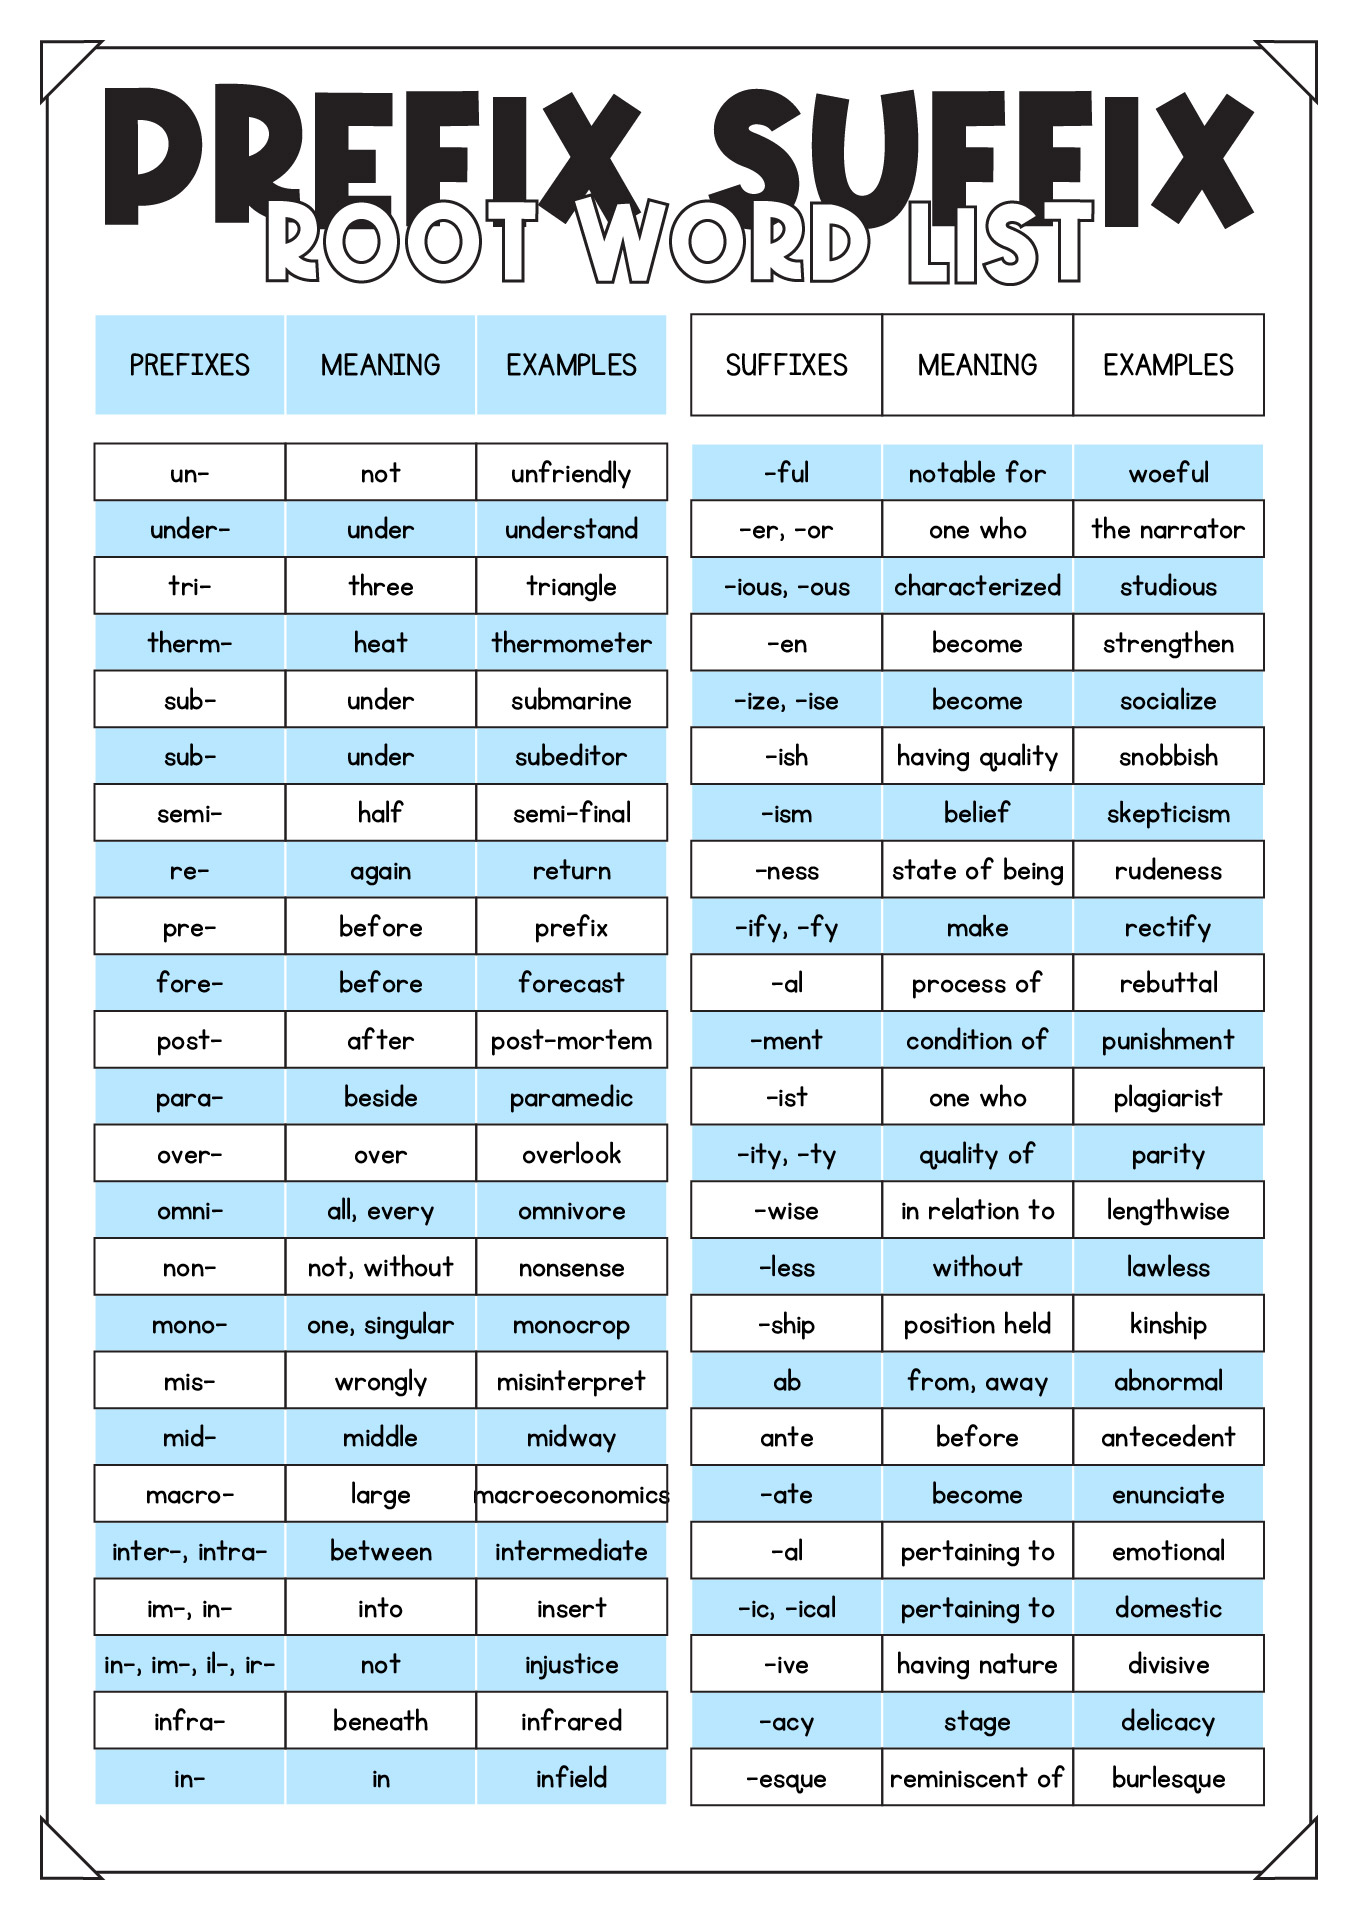 Prefix Suffix Root Word List Image